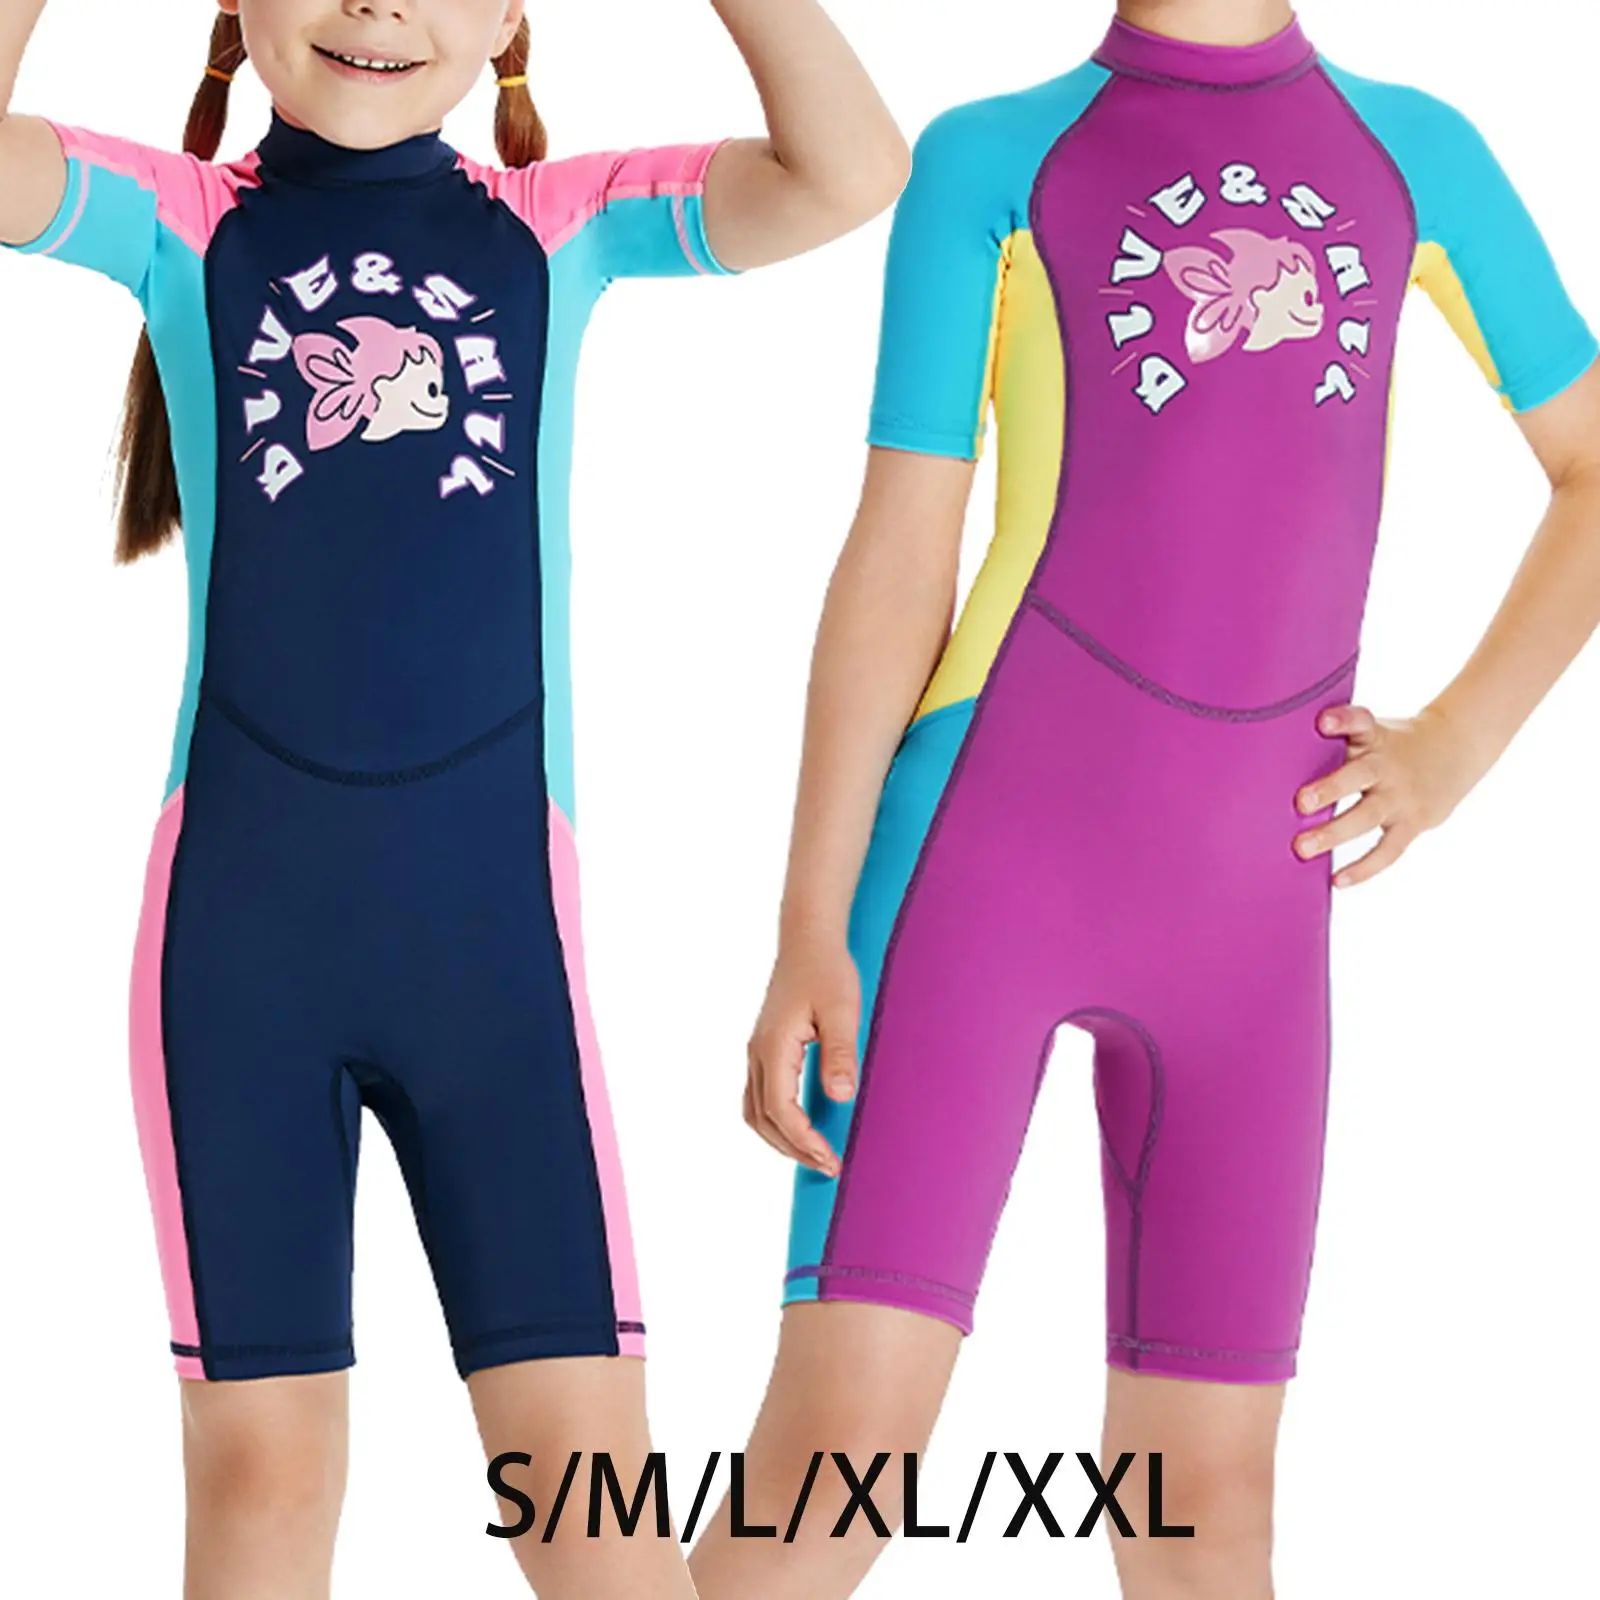 Kids Swimsuits Thermal Swimming Costume Girls Wetsuit for Surfing Kayak Swim